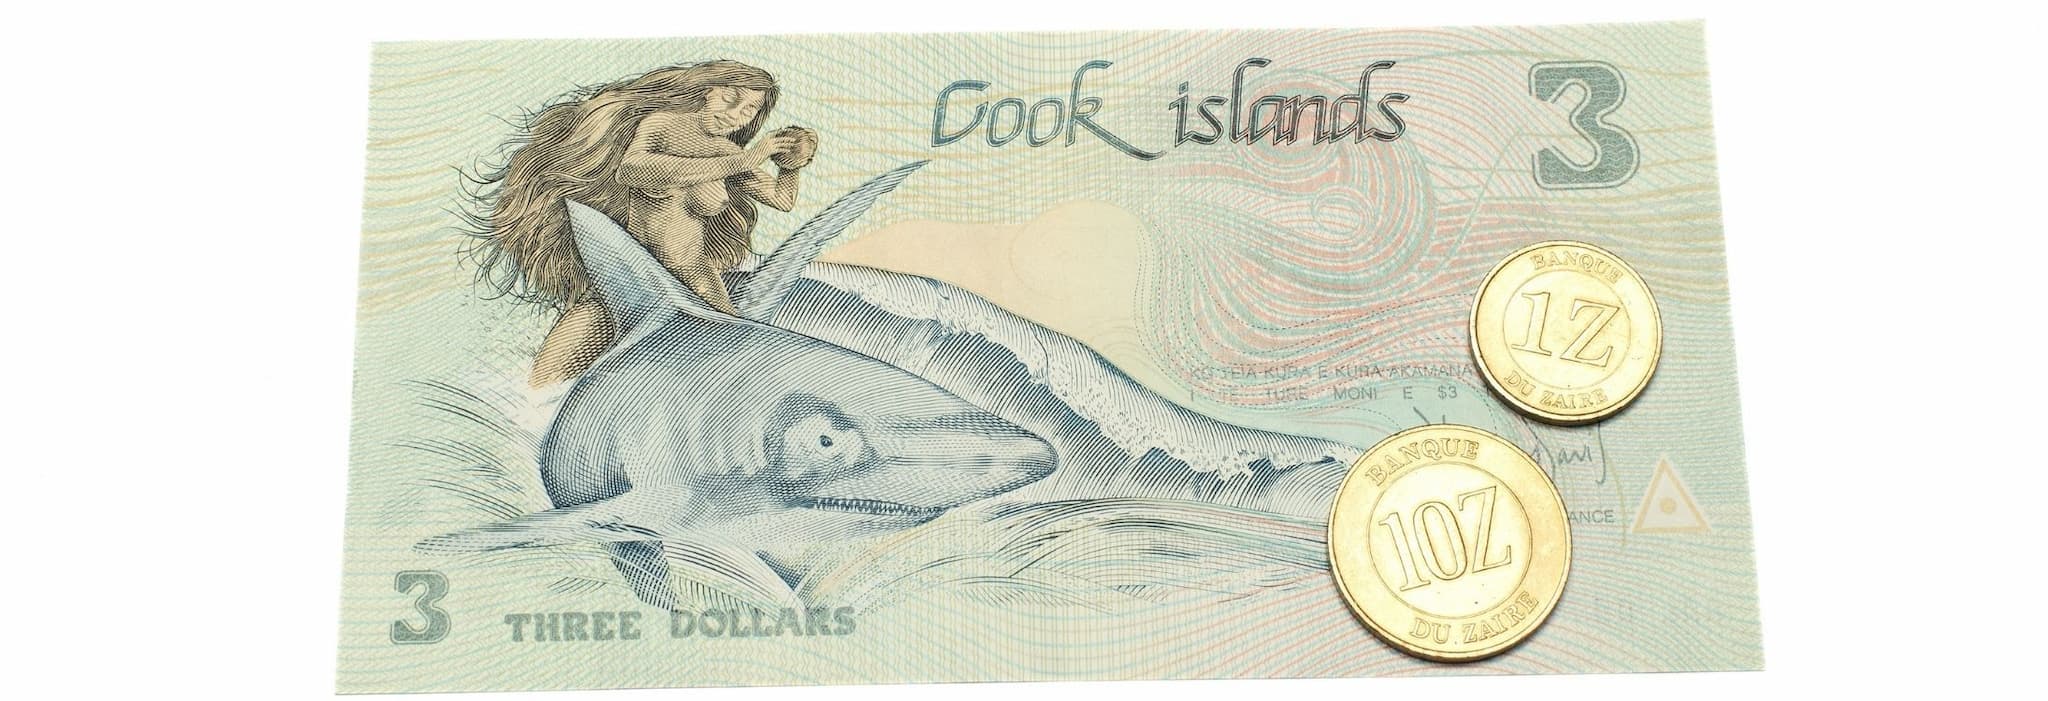 Dollar Bills, Cook Island